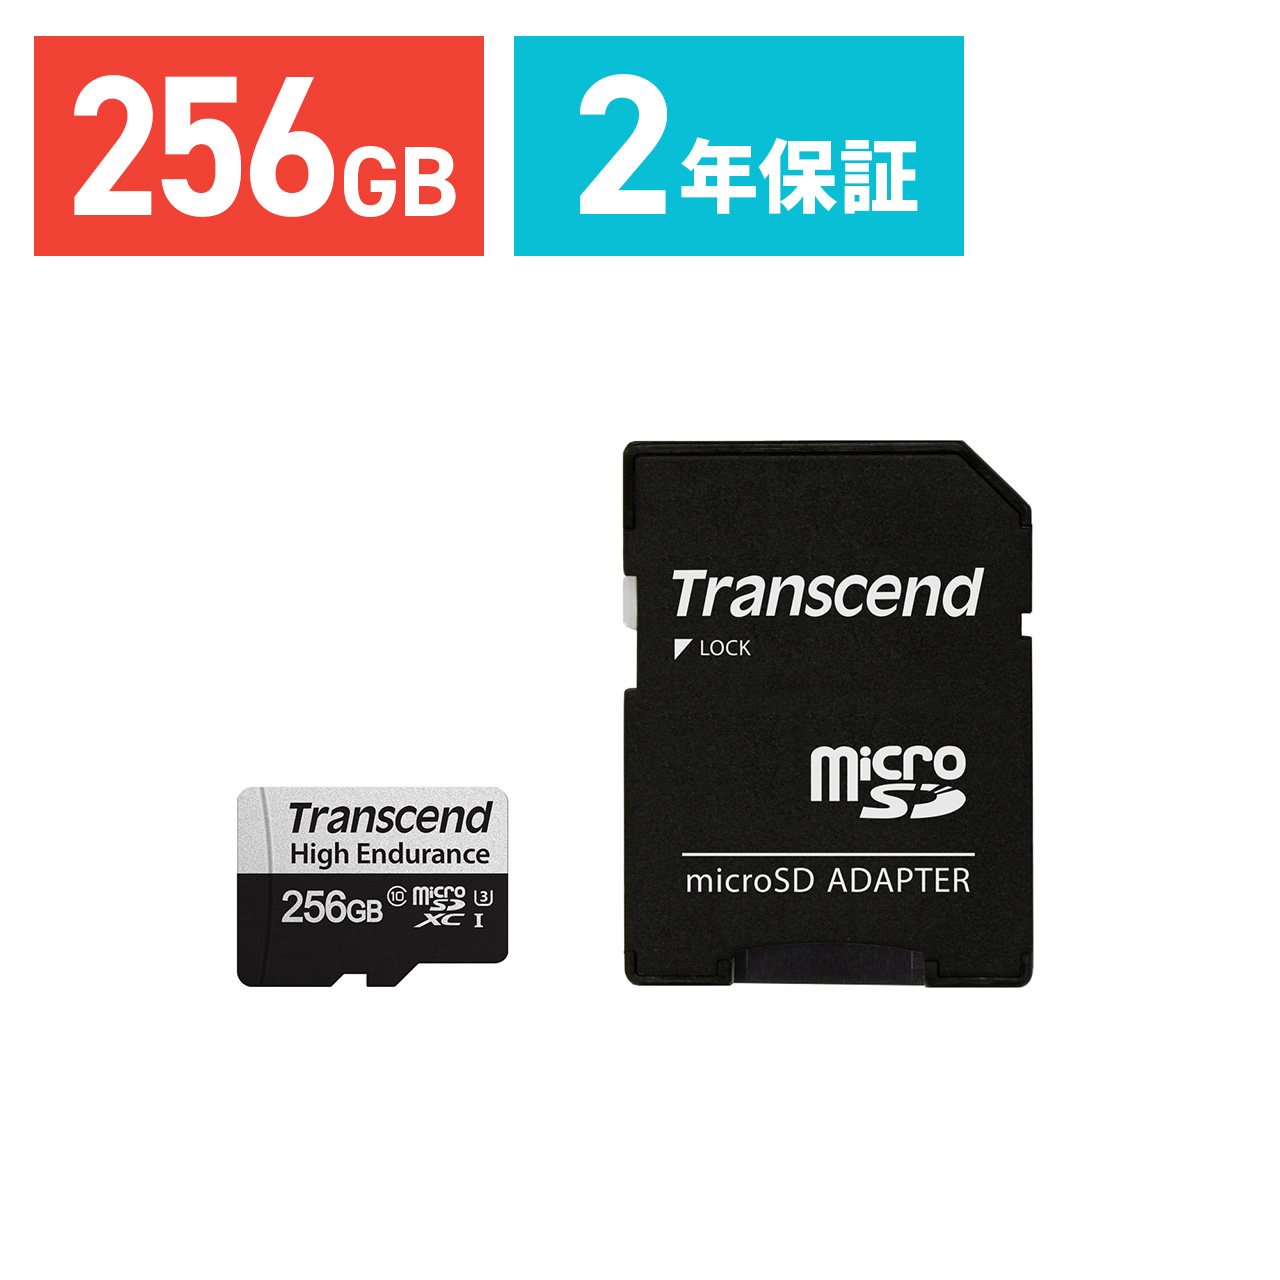 microSDXCカード 256GB Class10 UHS-I U3 高耐久 SDカード変換アダプタ付き Nintendo Switch ROG Ally 対応 Transcend製 TS256GUSD350V